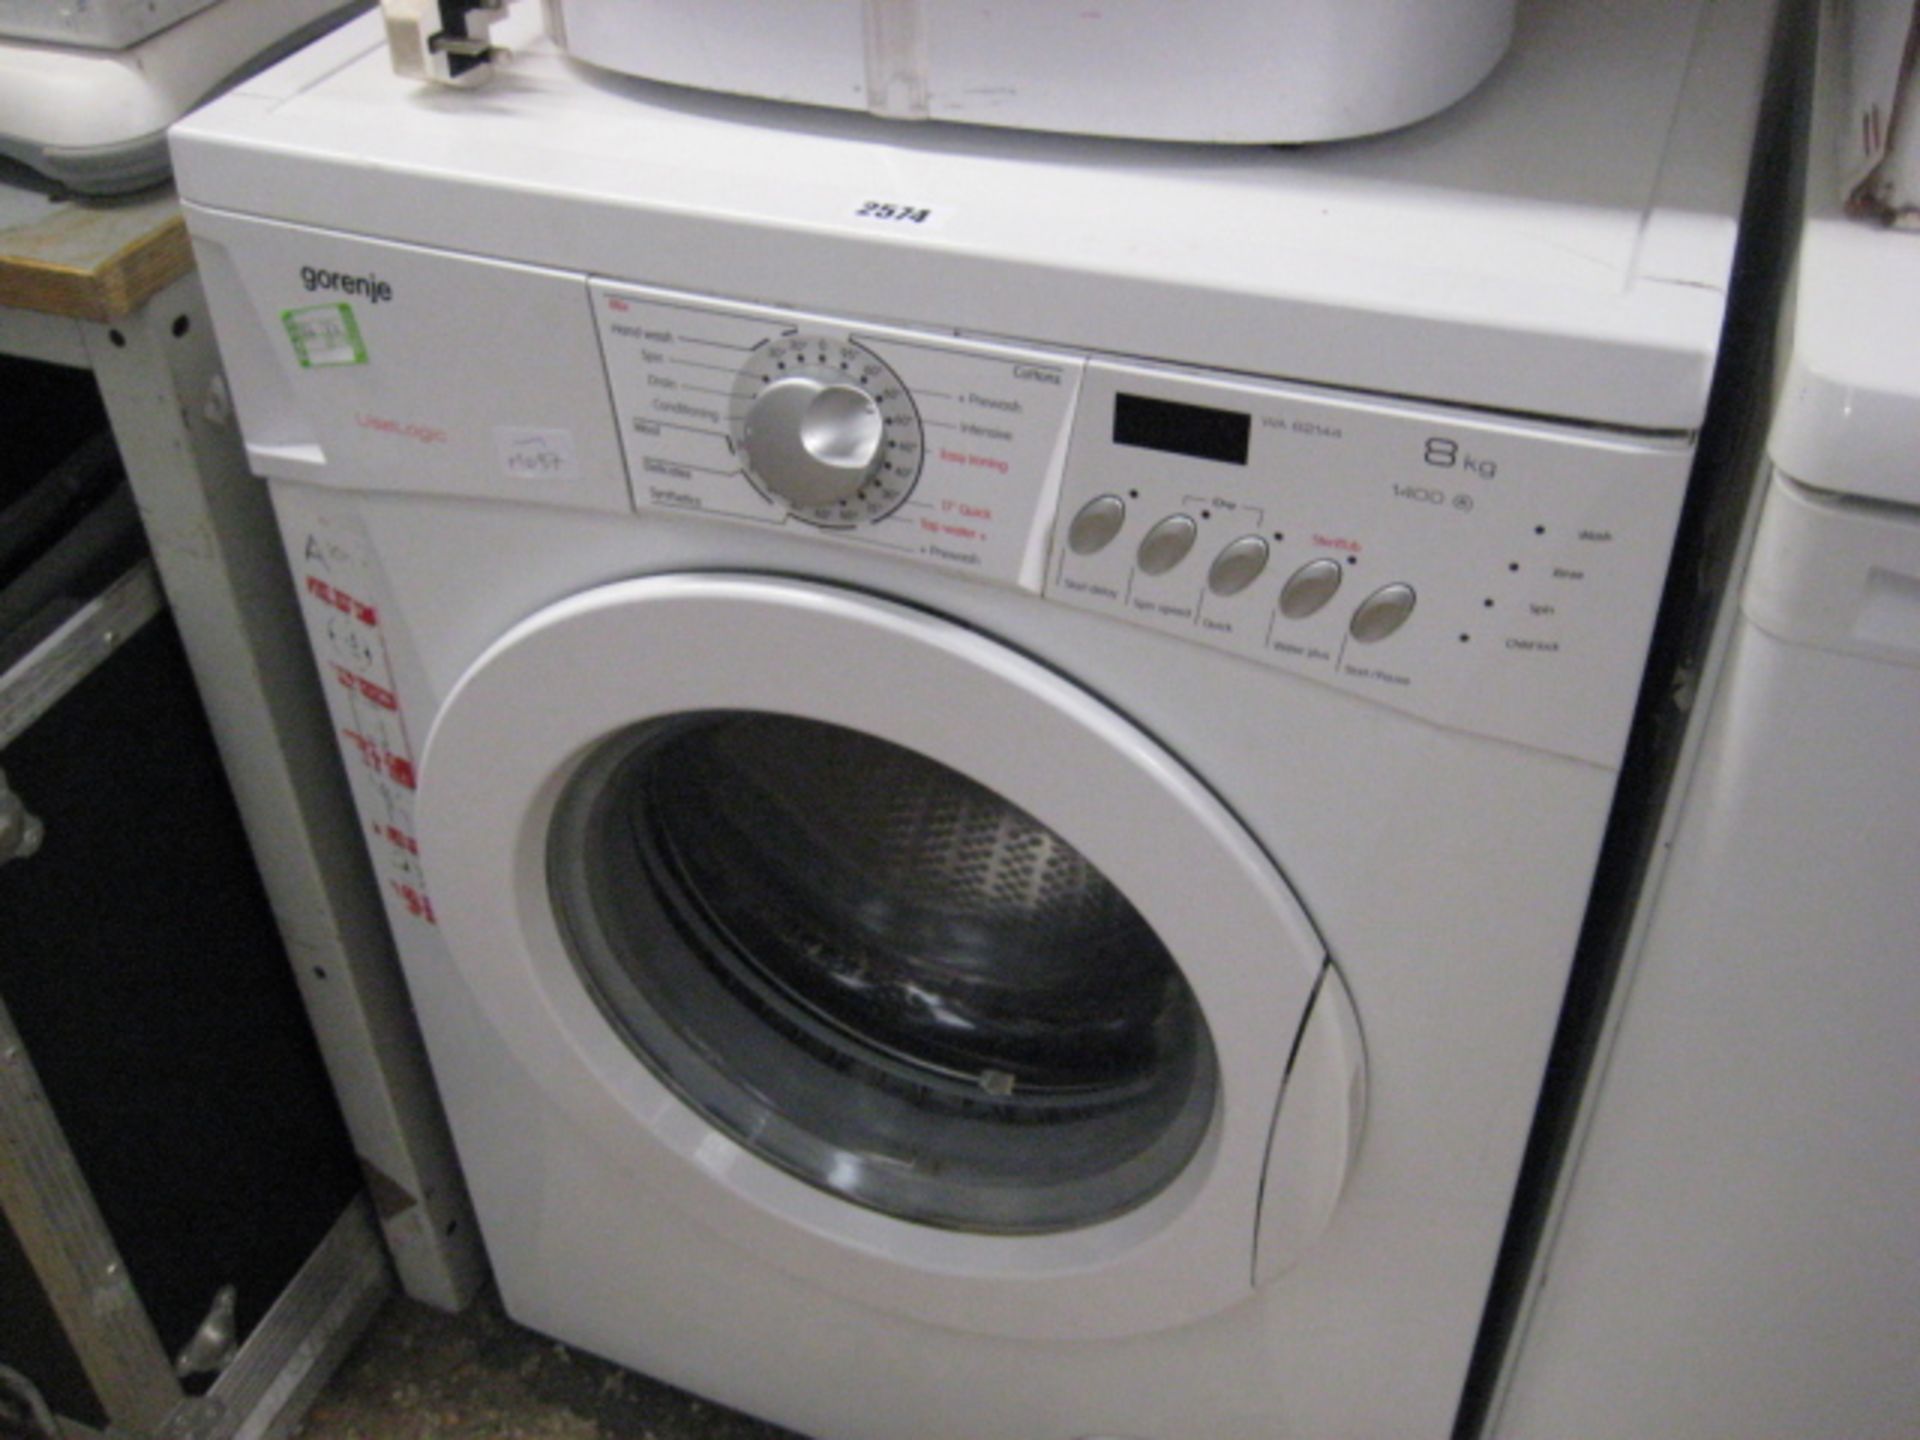 (32) Gorenje washing machine